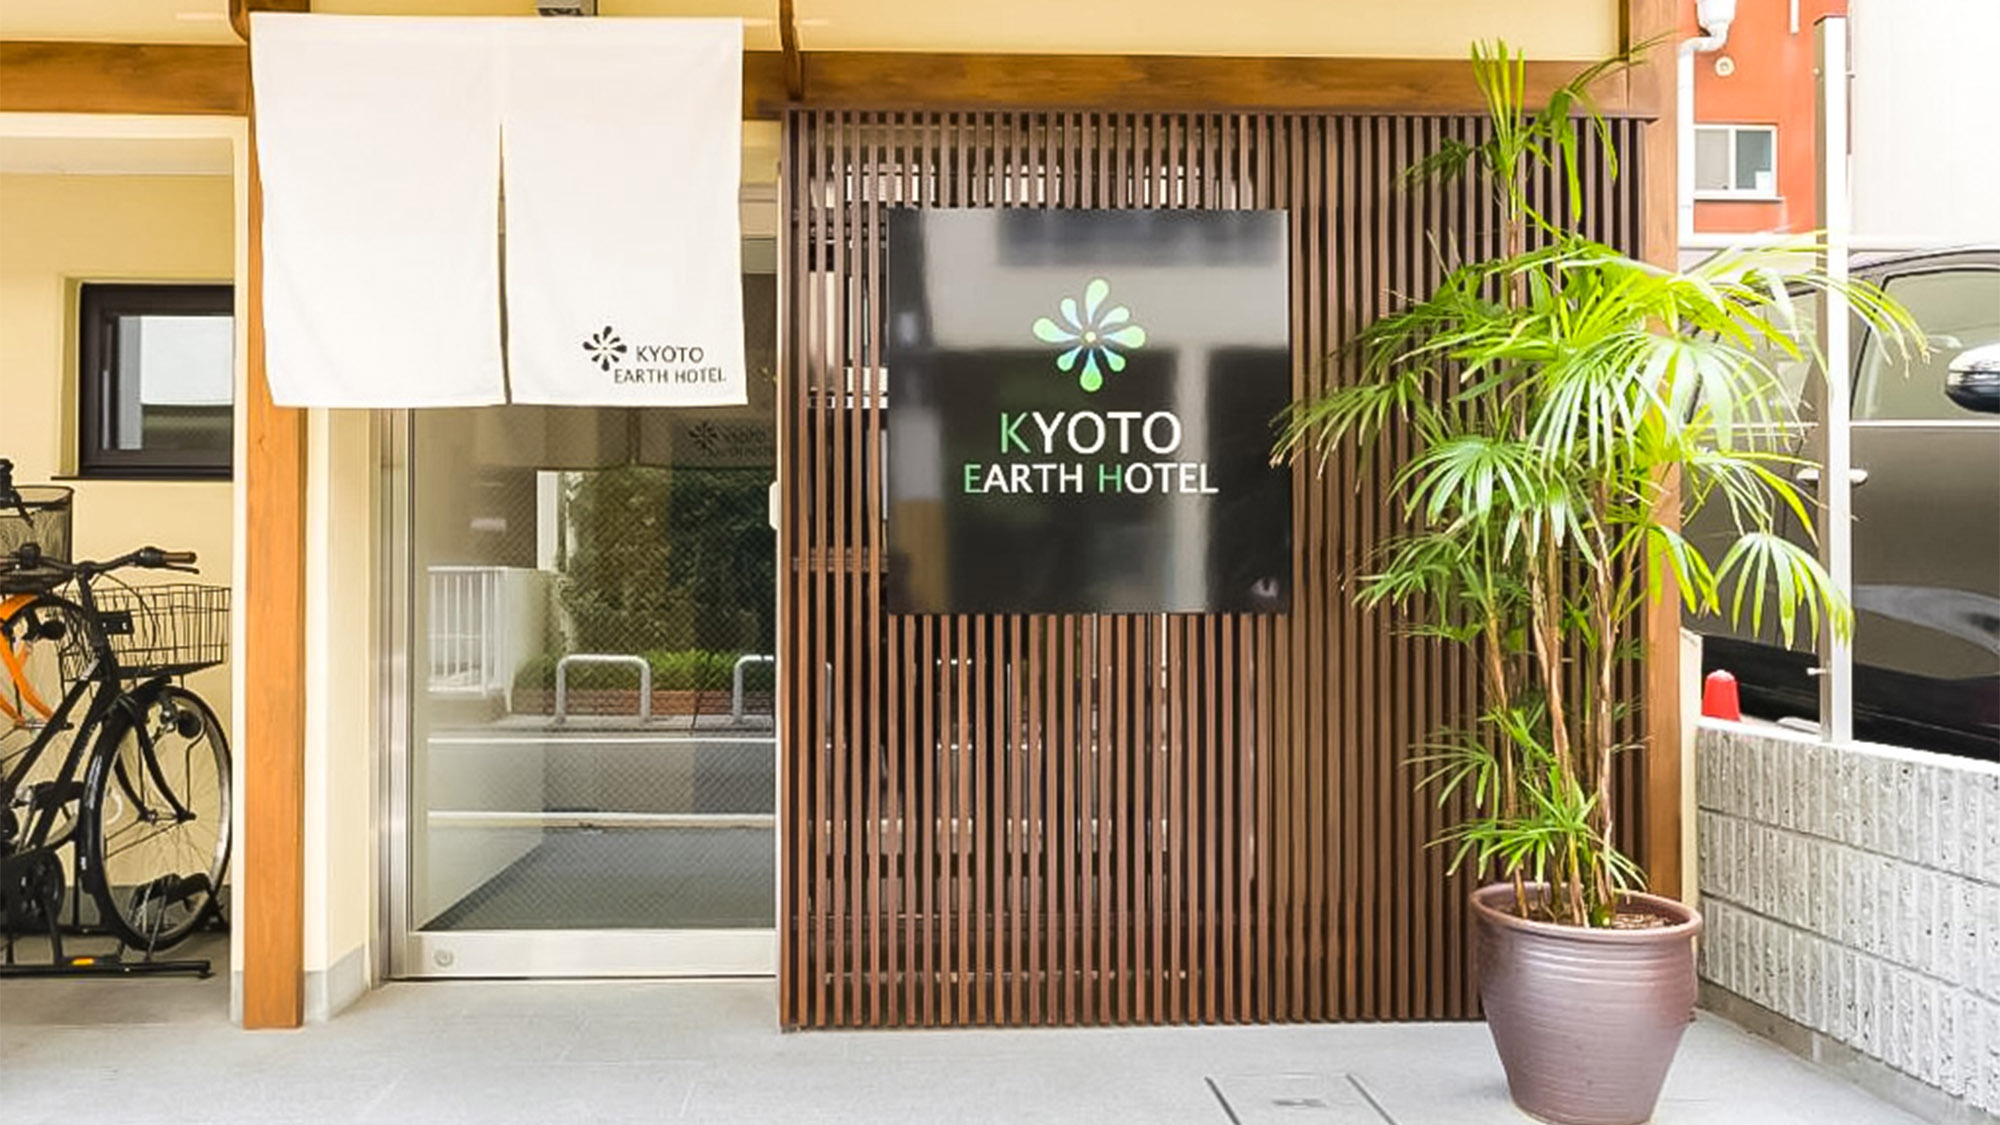 Kyoto Earth Hotel image